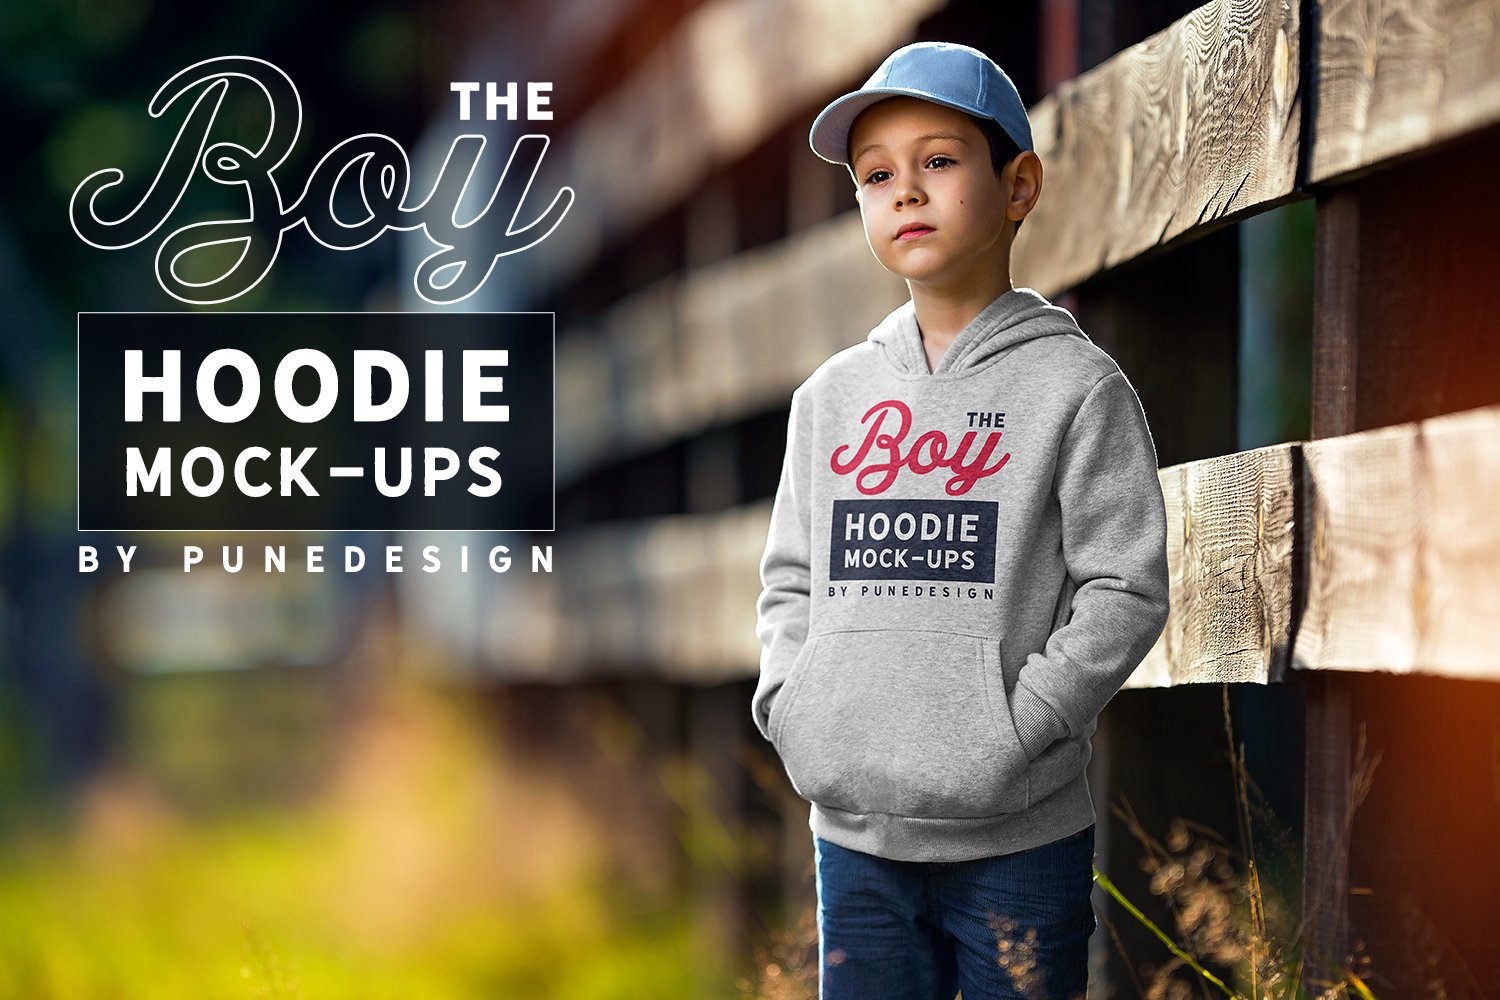 Boy Hoodie Mock-Up cover image.